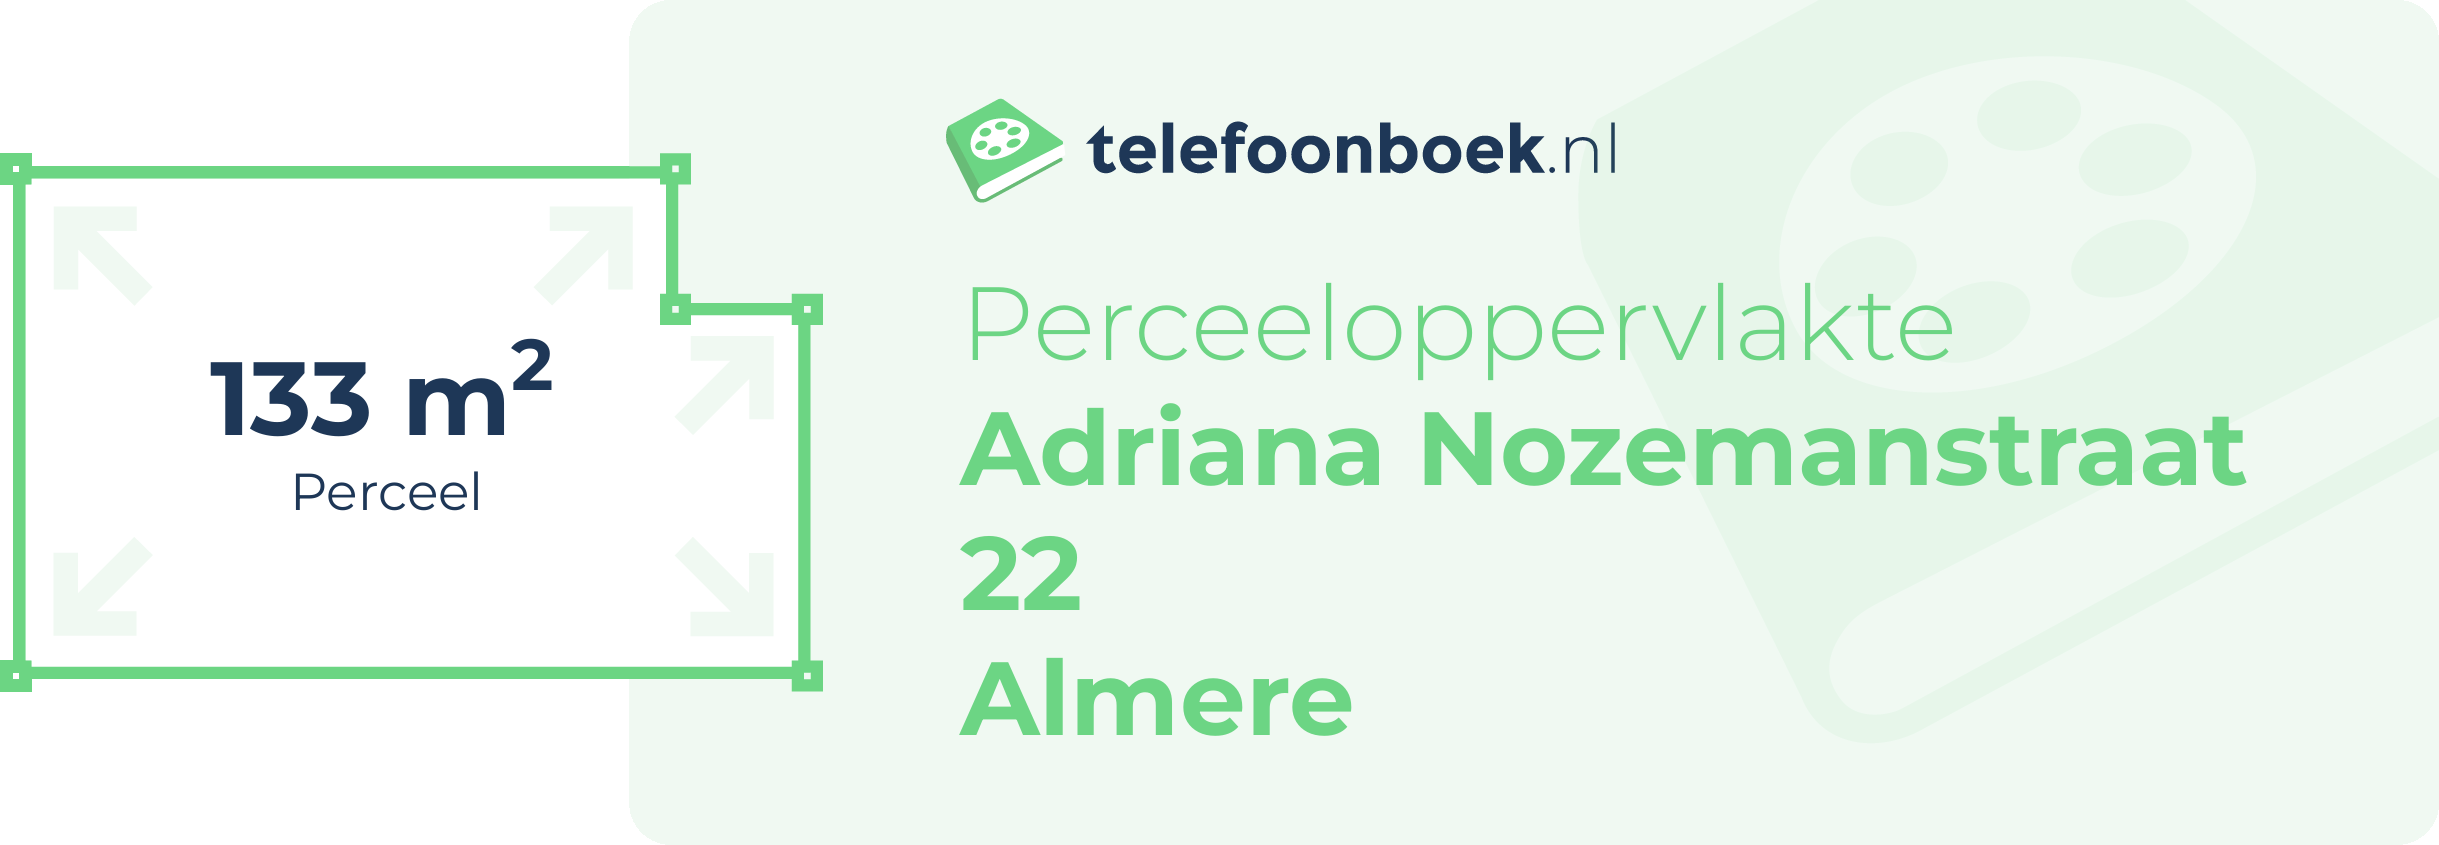 Perceeloppervlakte Adriana Nozemanstraat 22 Almere